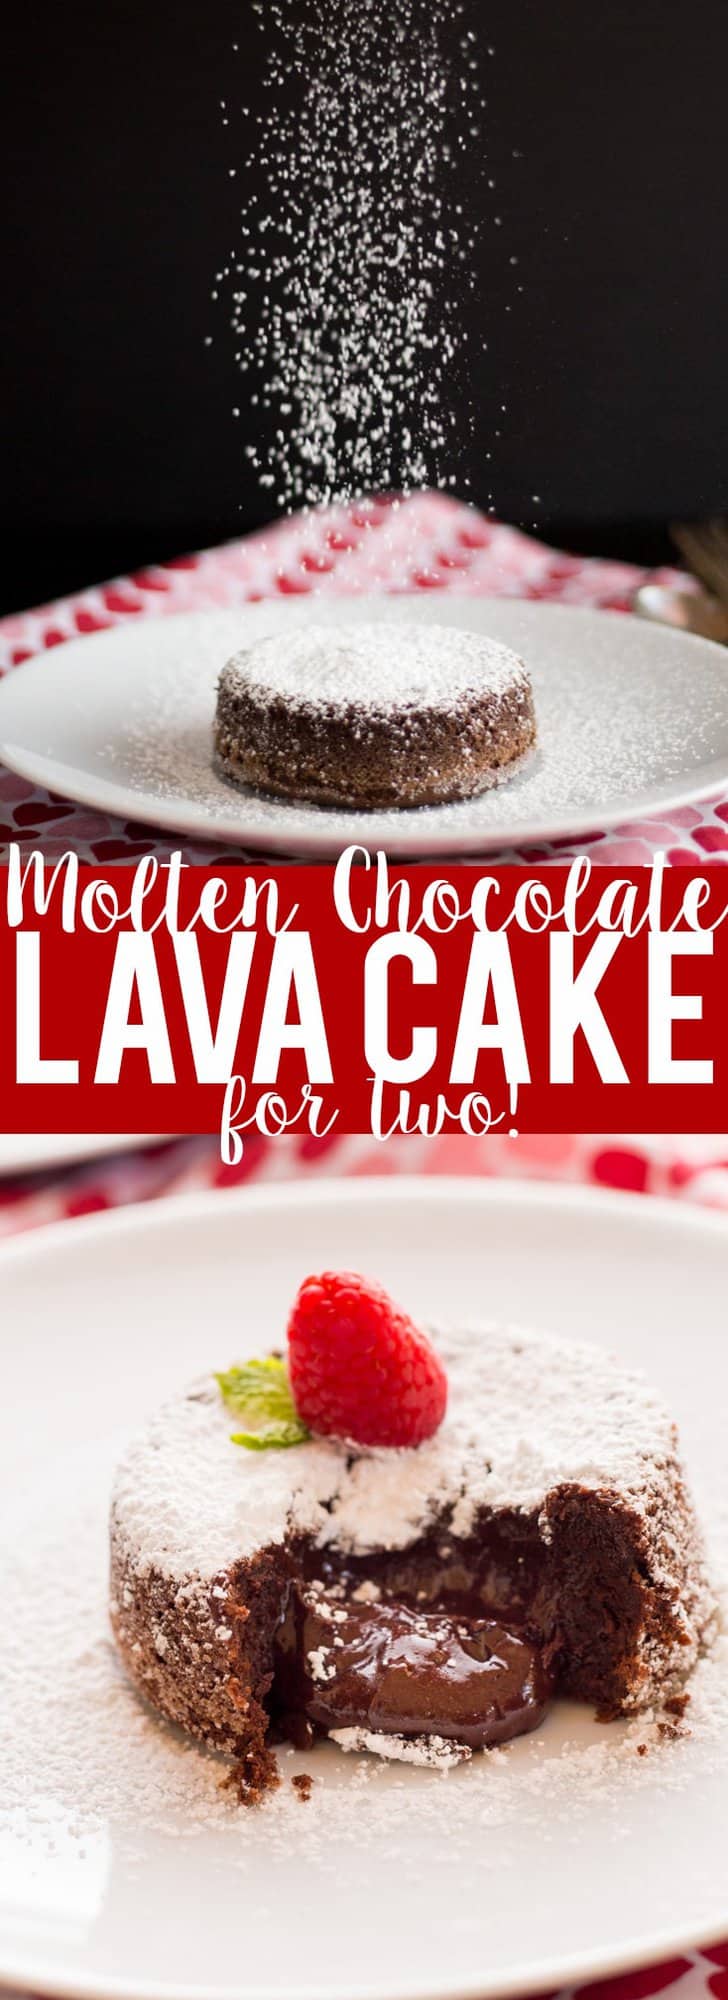 Molten Chcocolate Lava Cake For two | Dessert for Two | Small Batch Baking | Romantic Dessert | Valentine's Day Dessert | Date Night